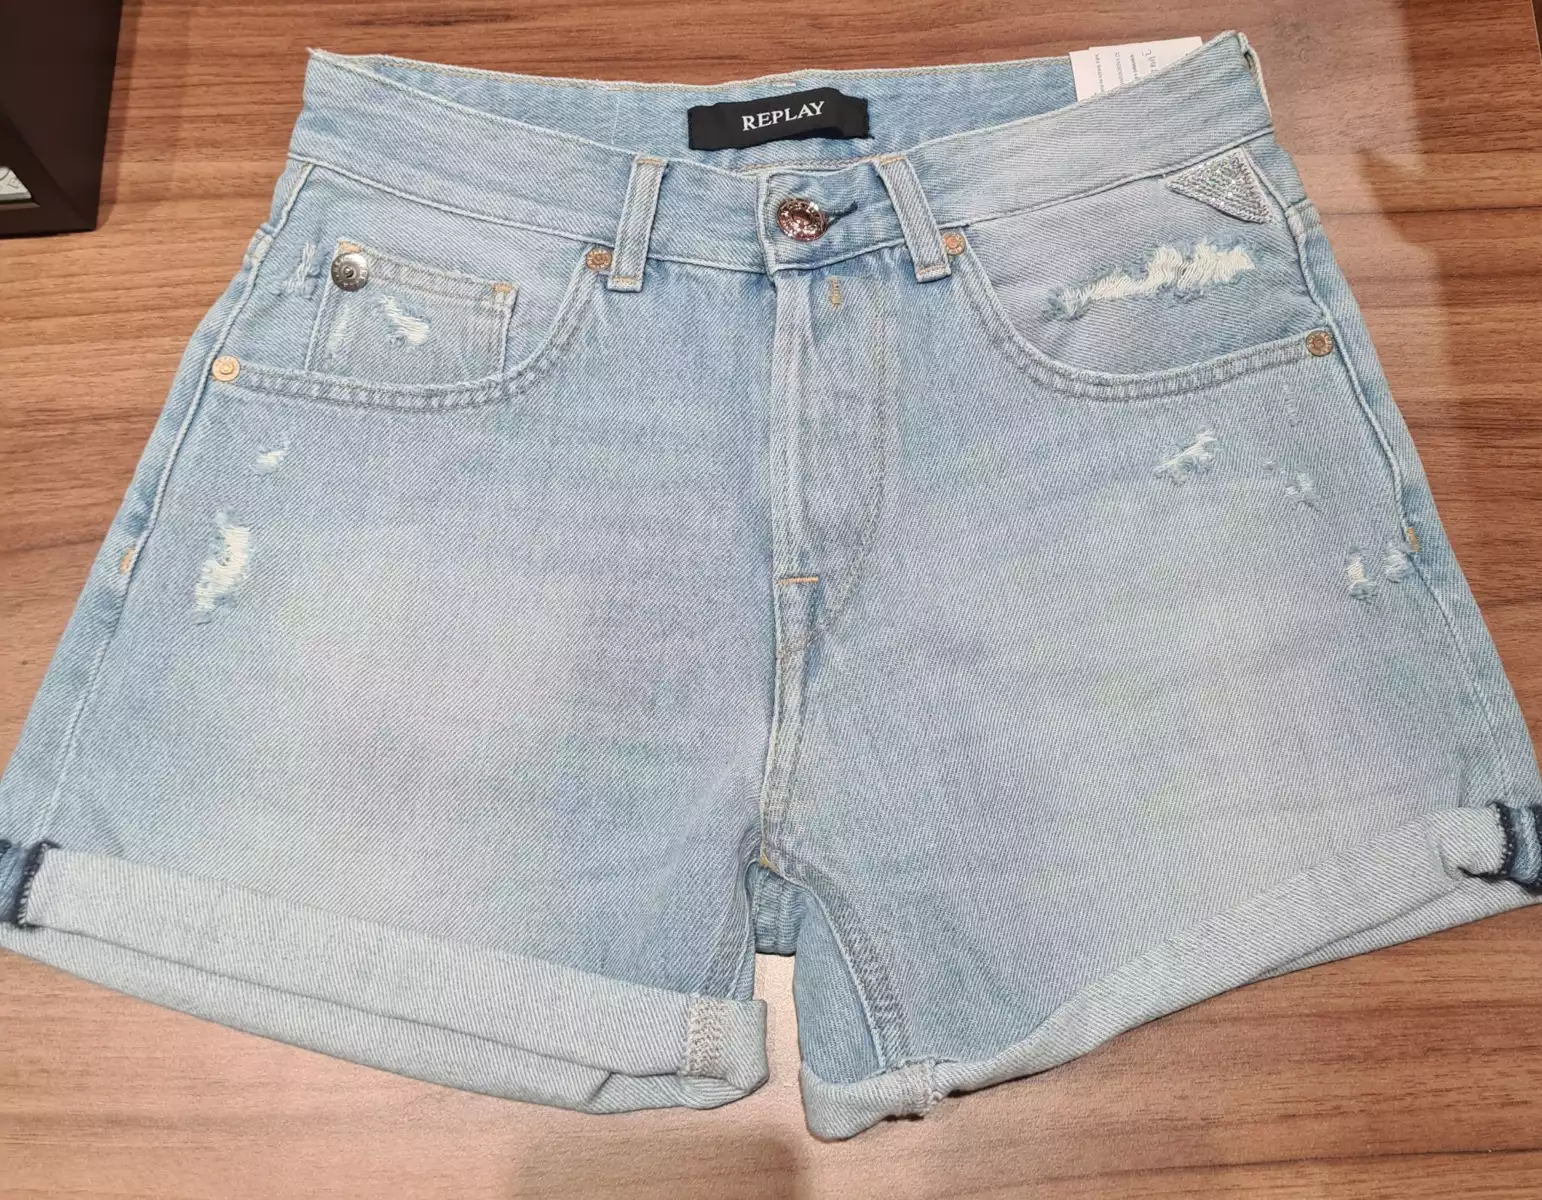 Shorts-12.5 oz original open-end denim